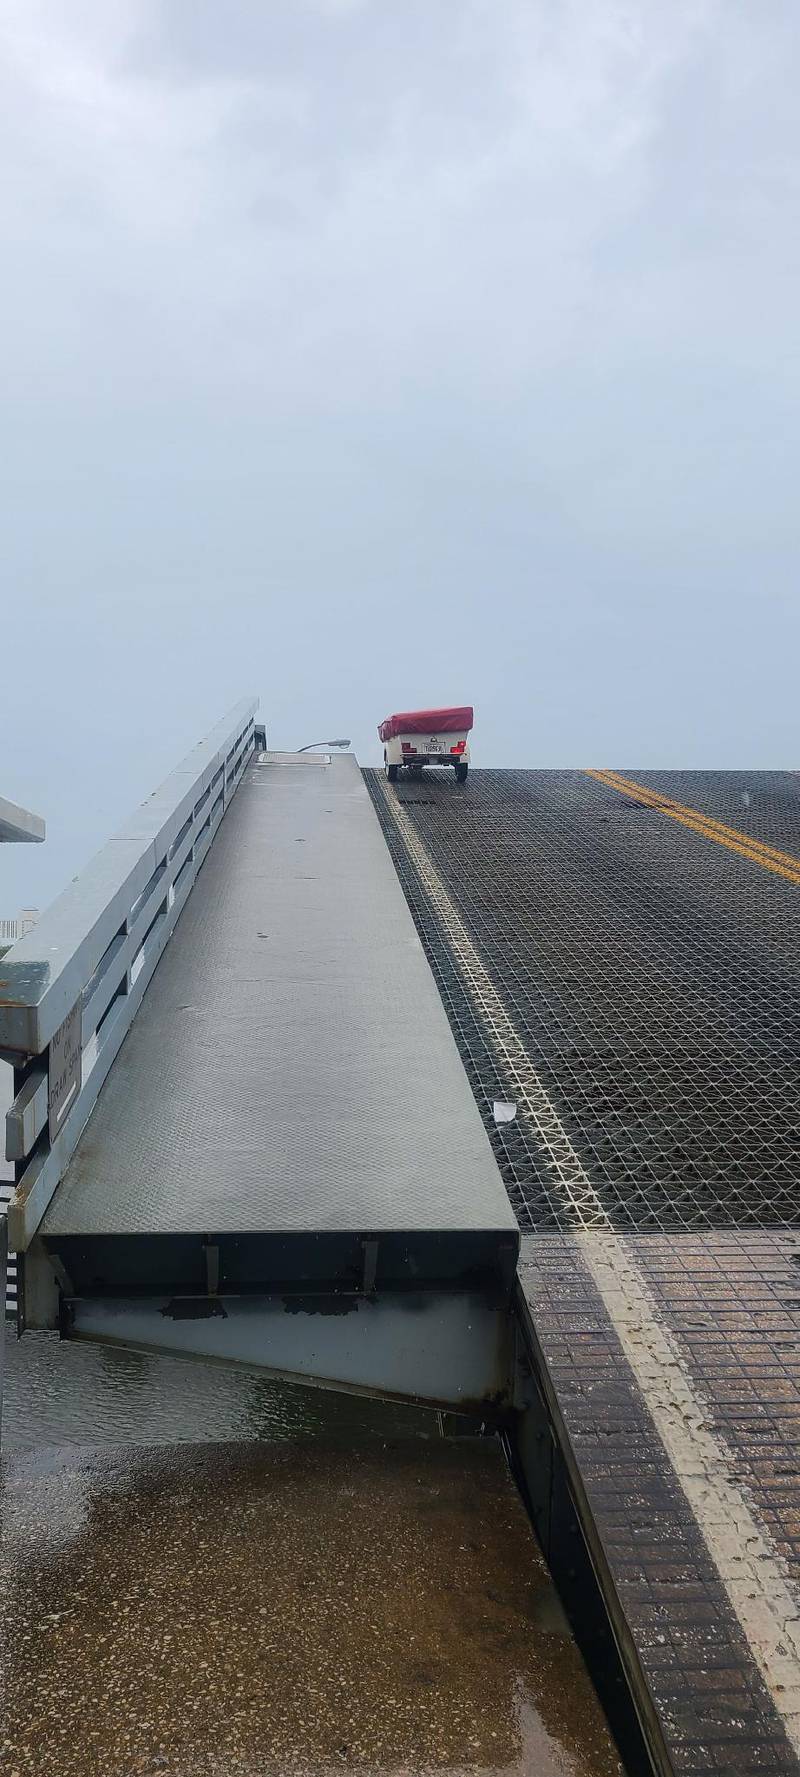 Daytona Beach’s Main Street Bridge is closed do to a traffic accident